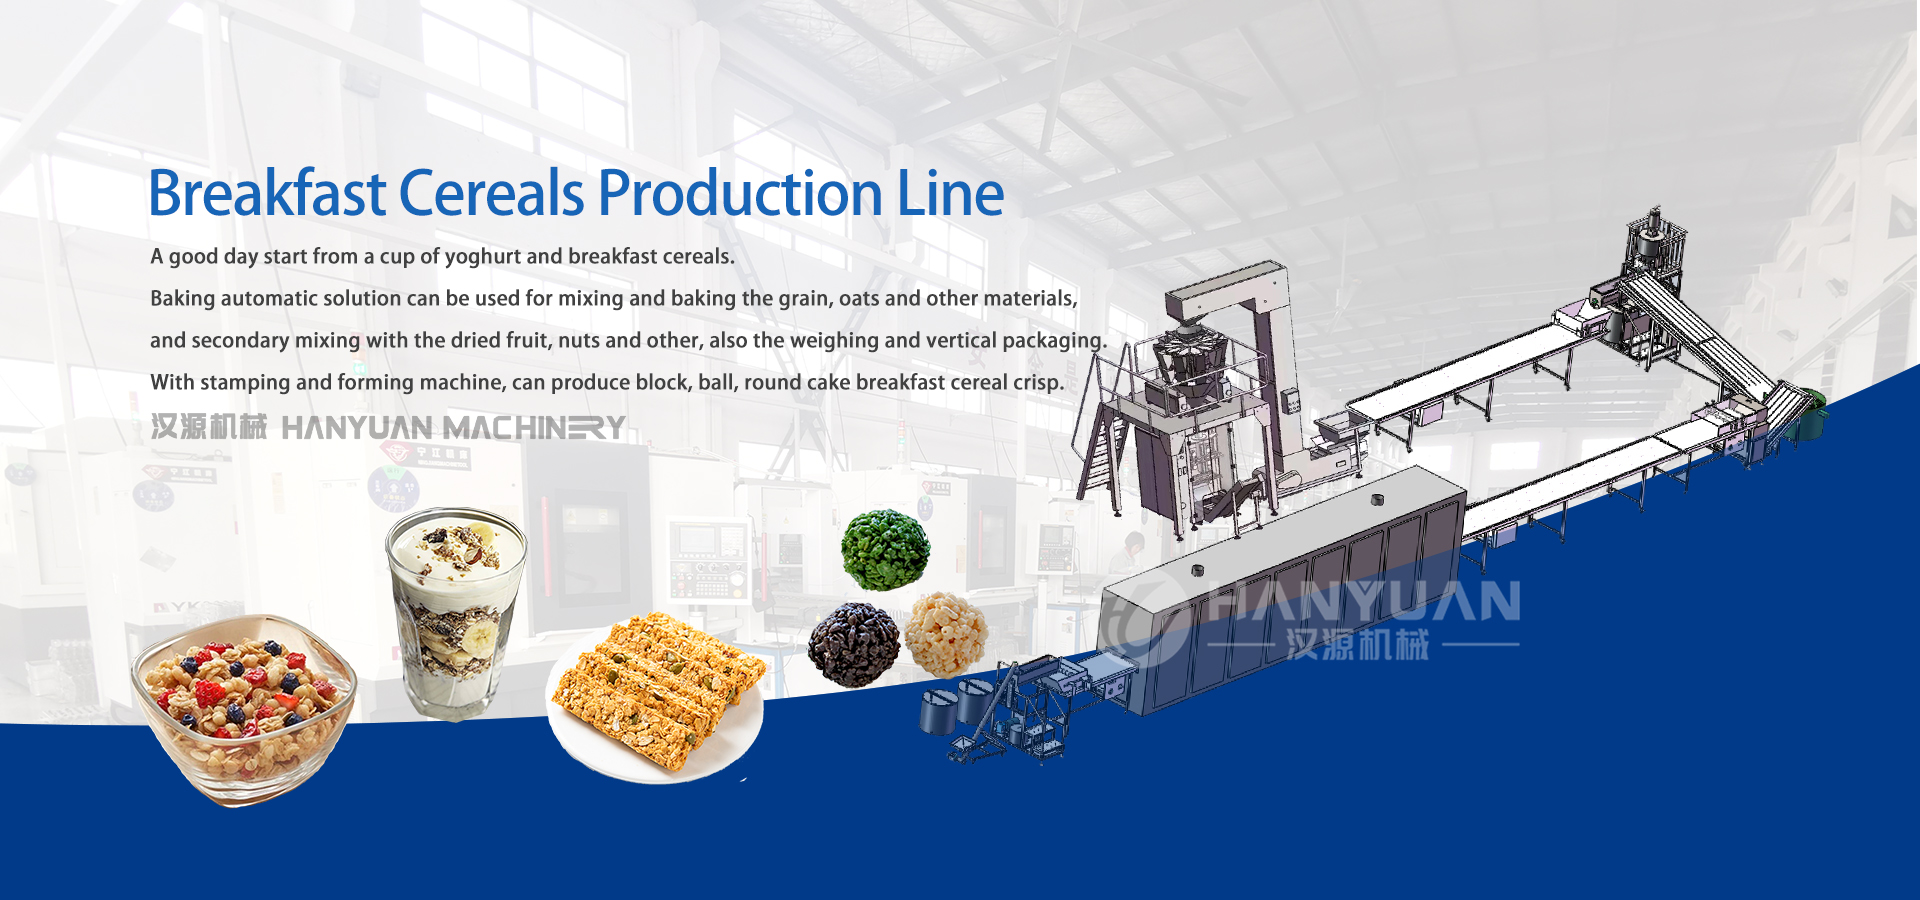 4.2 Breakfast Cereals Production Line